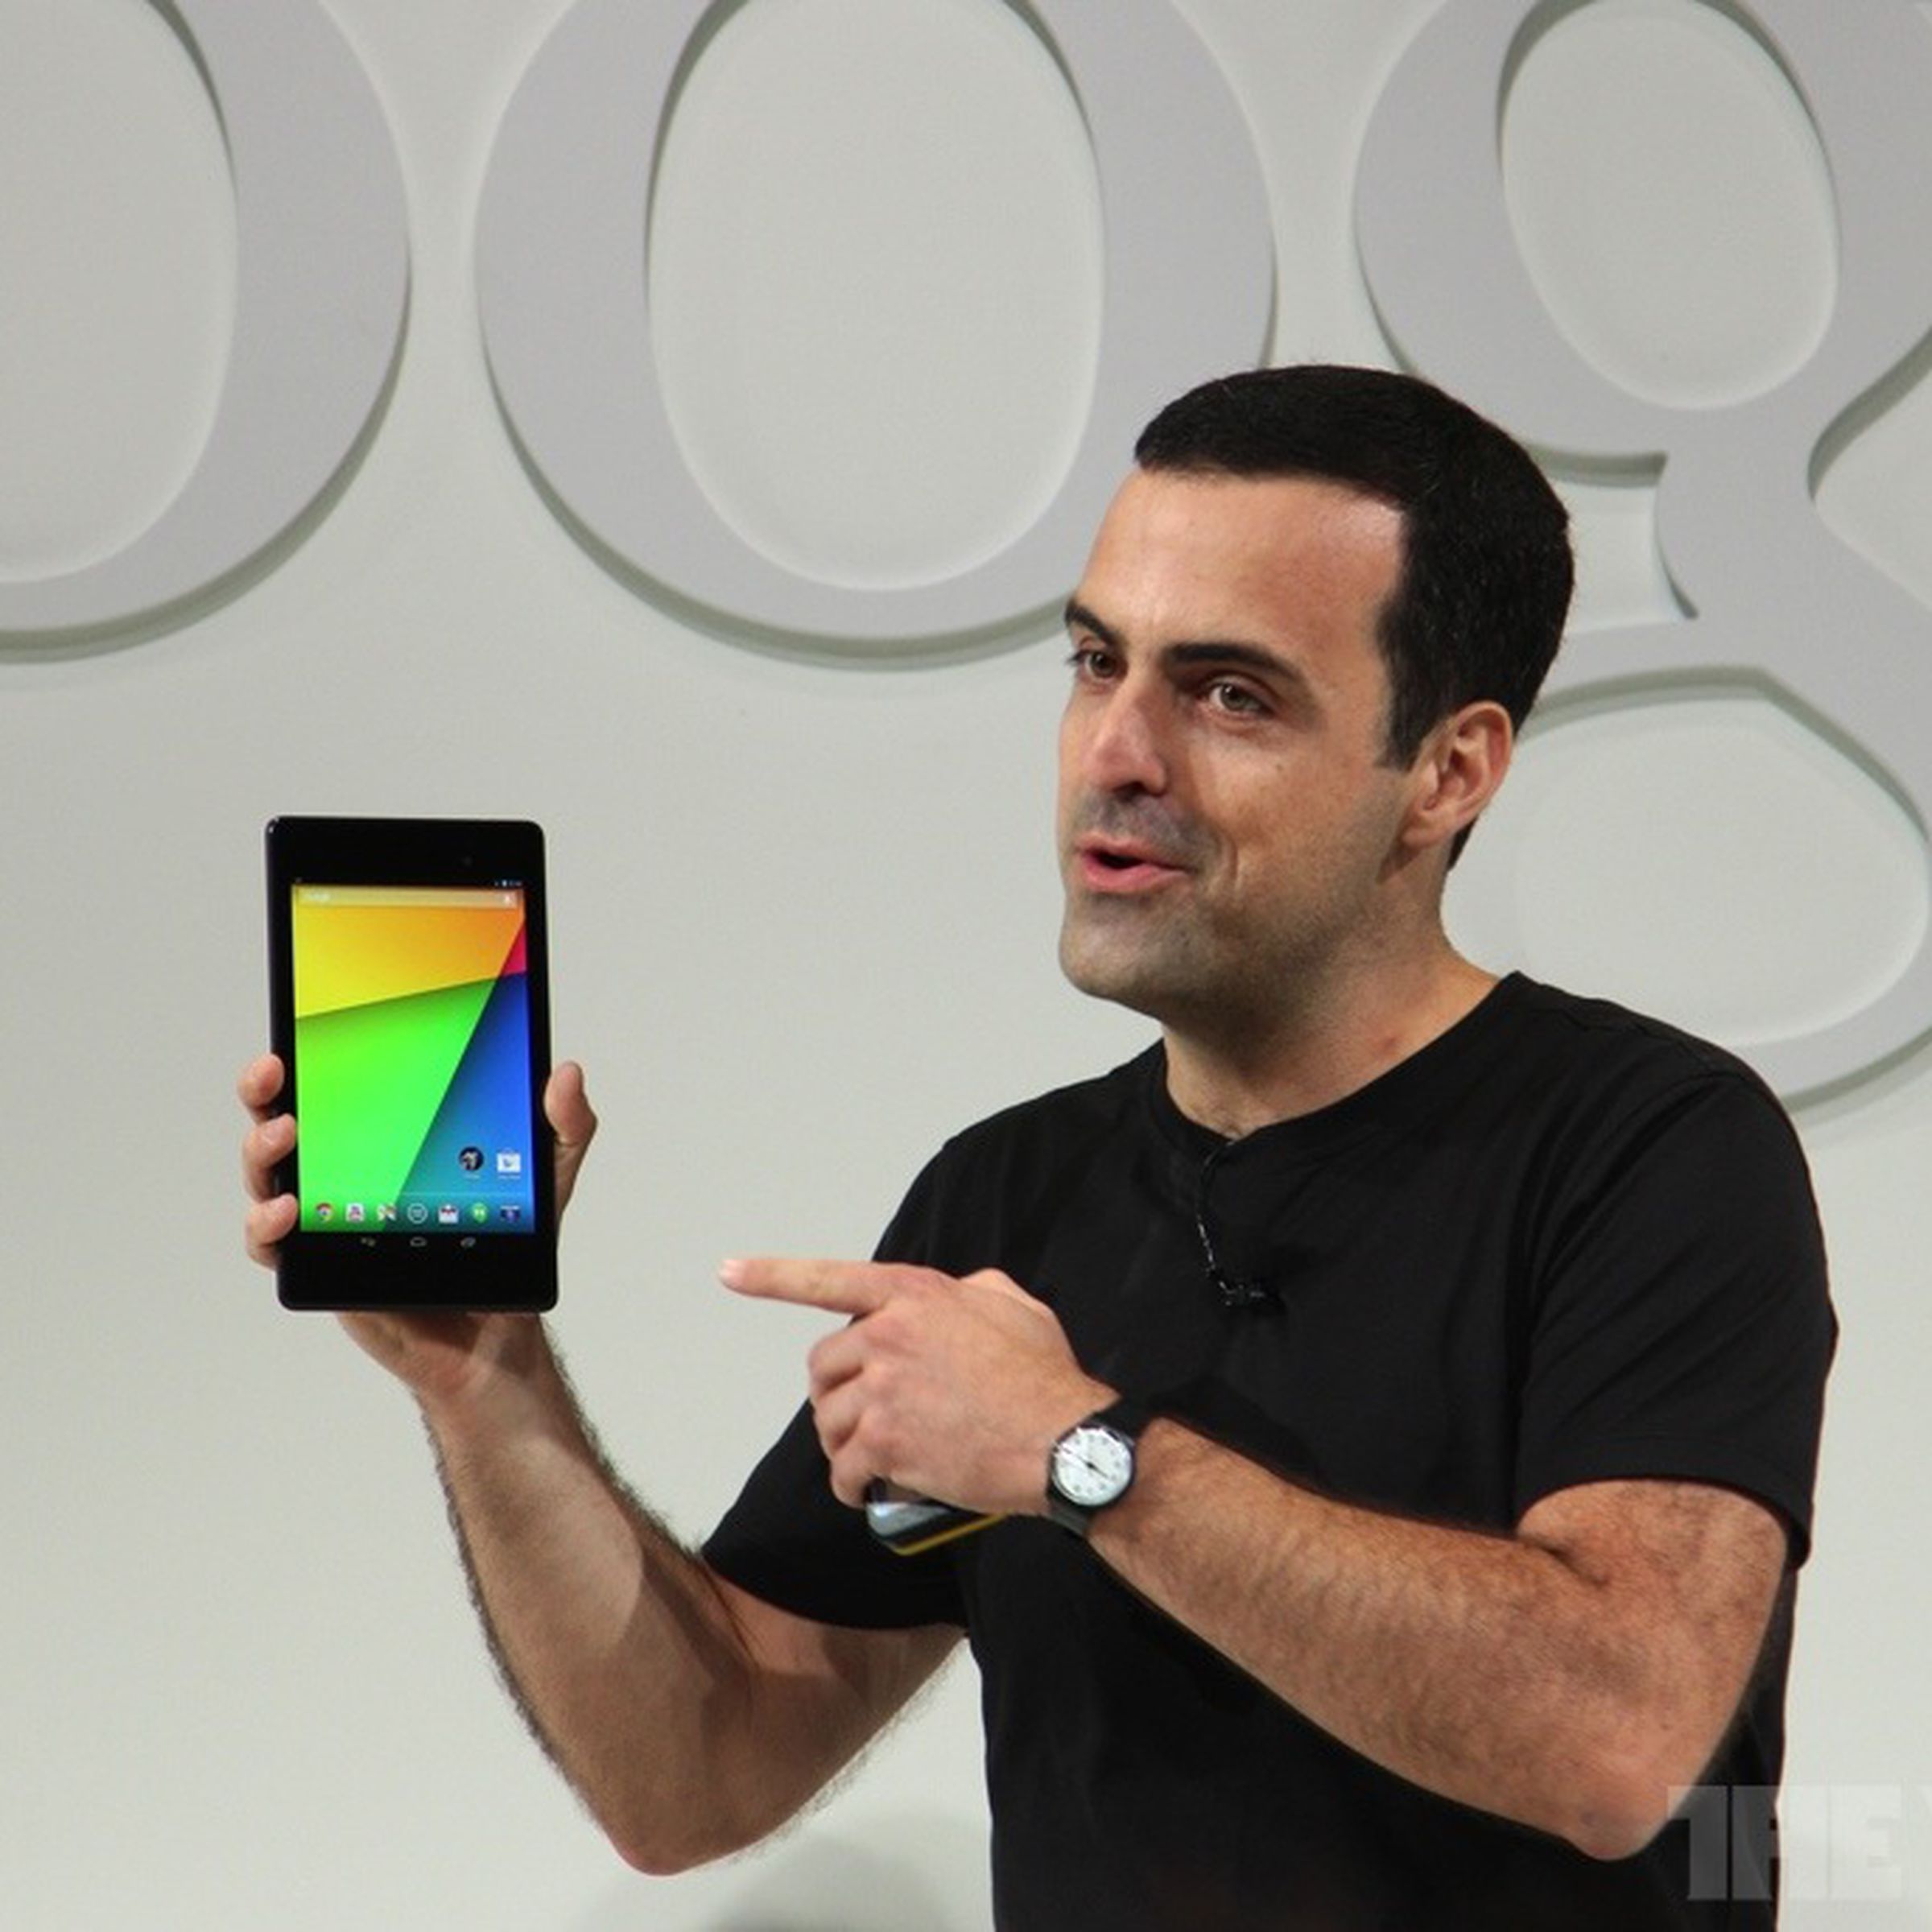 Google Hugo Barra Nexus 7 stock 1020 2-3